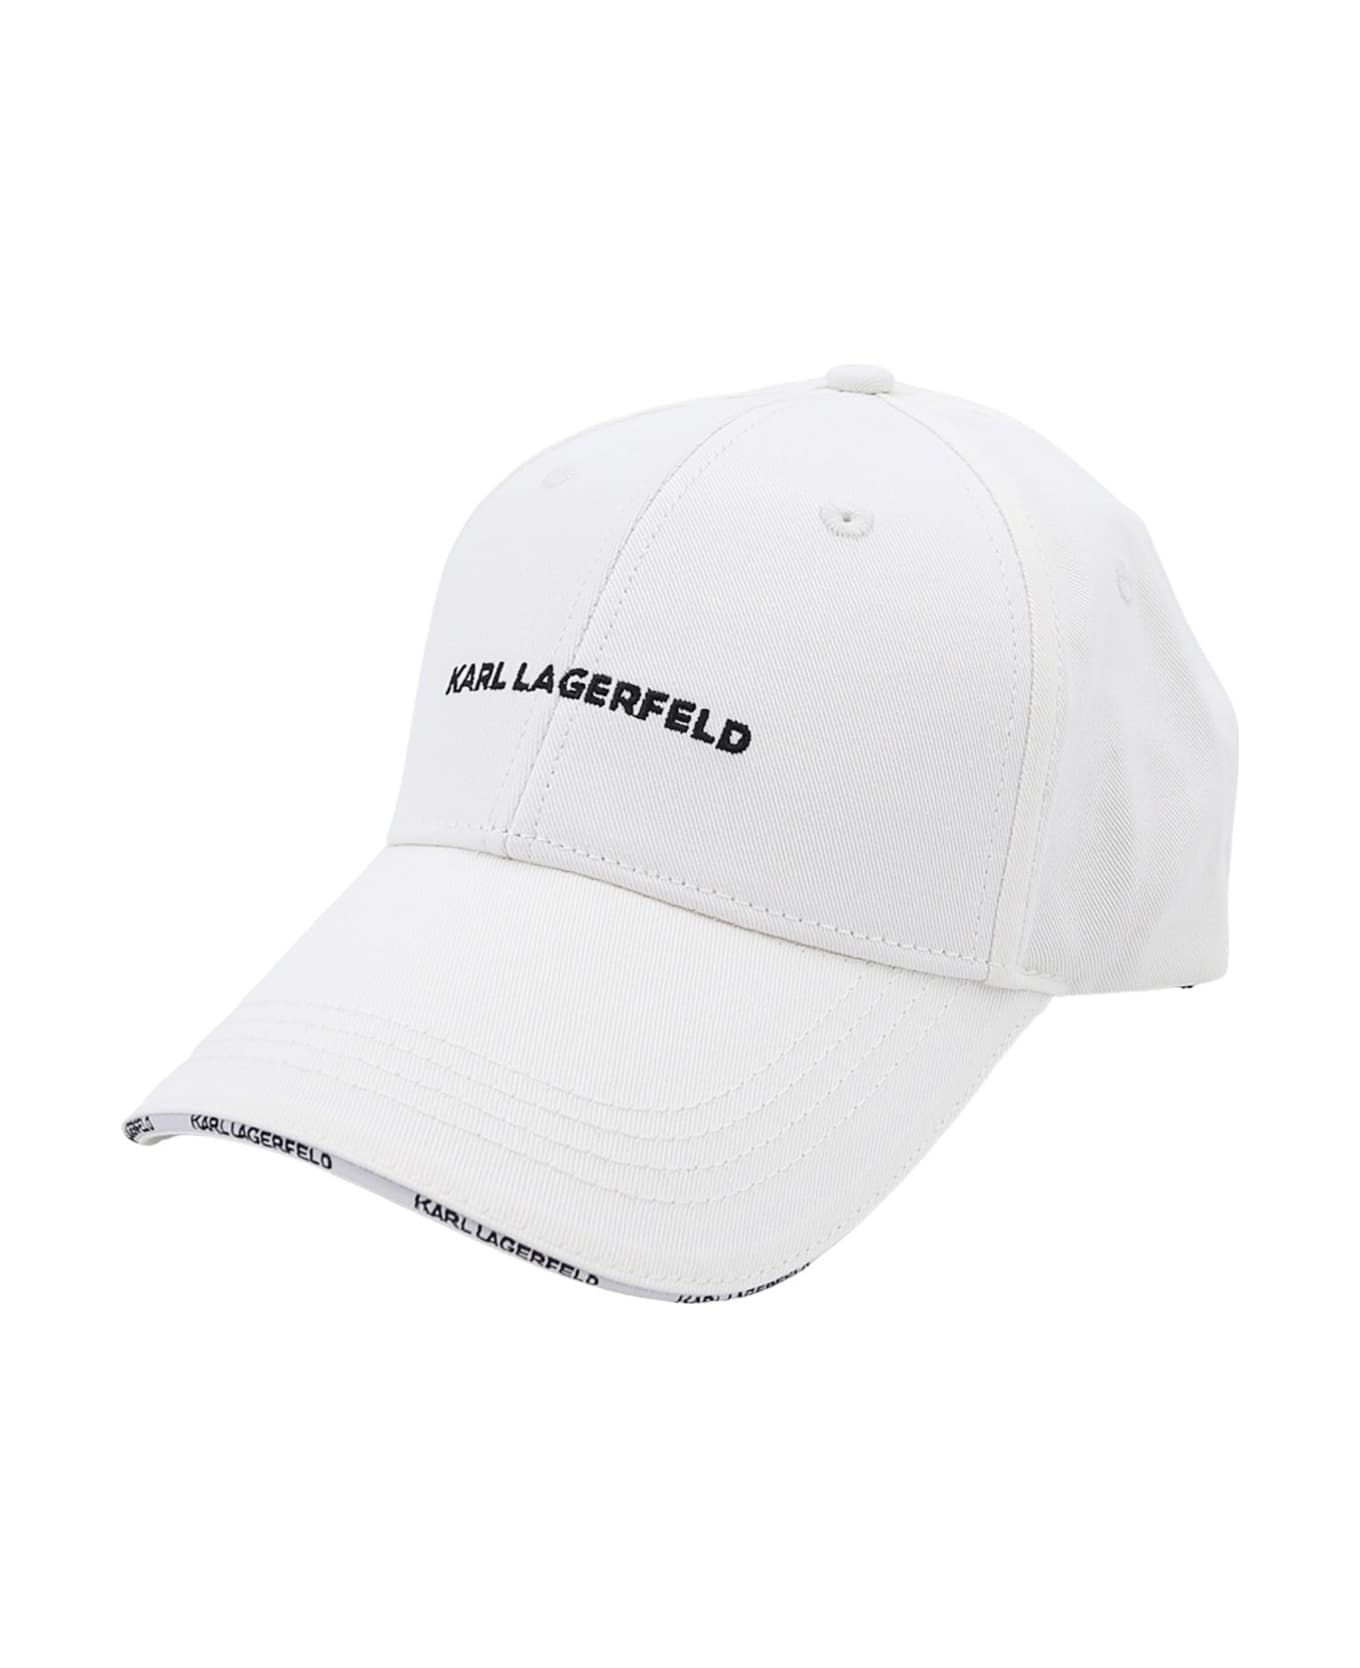 Karl Lagerfeld Hat - White